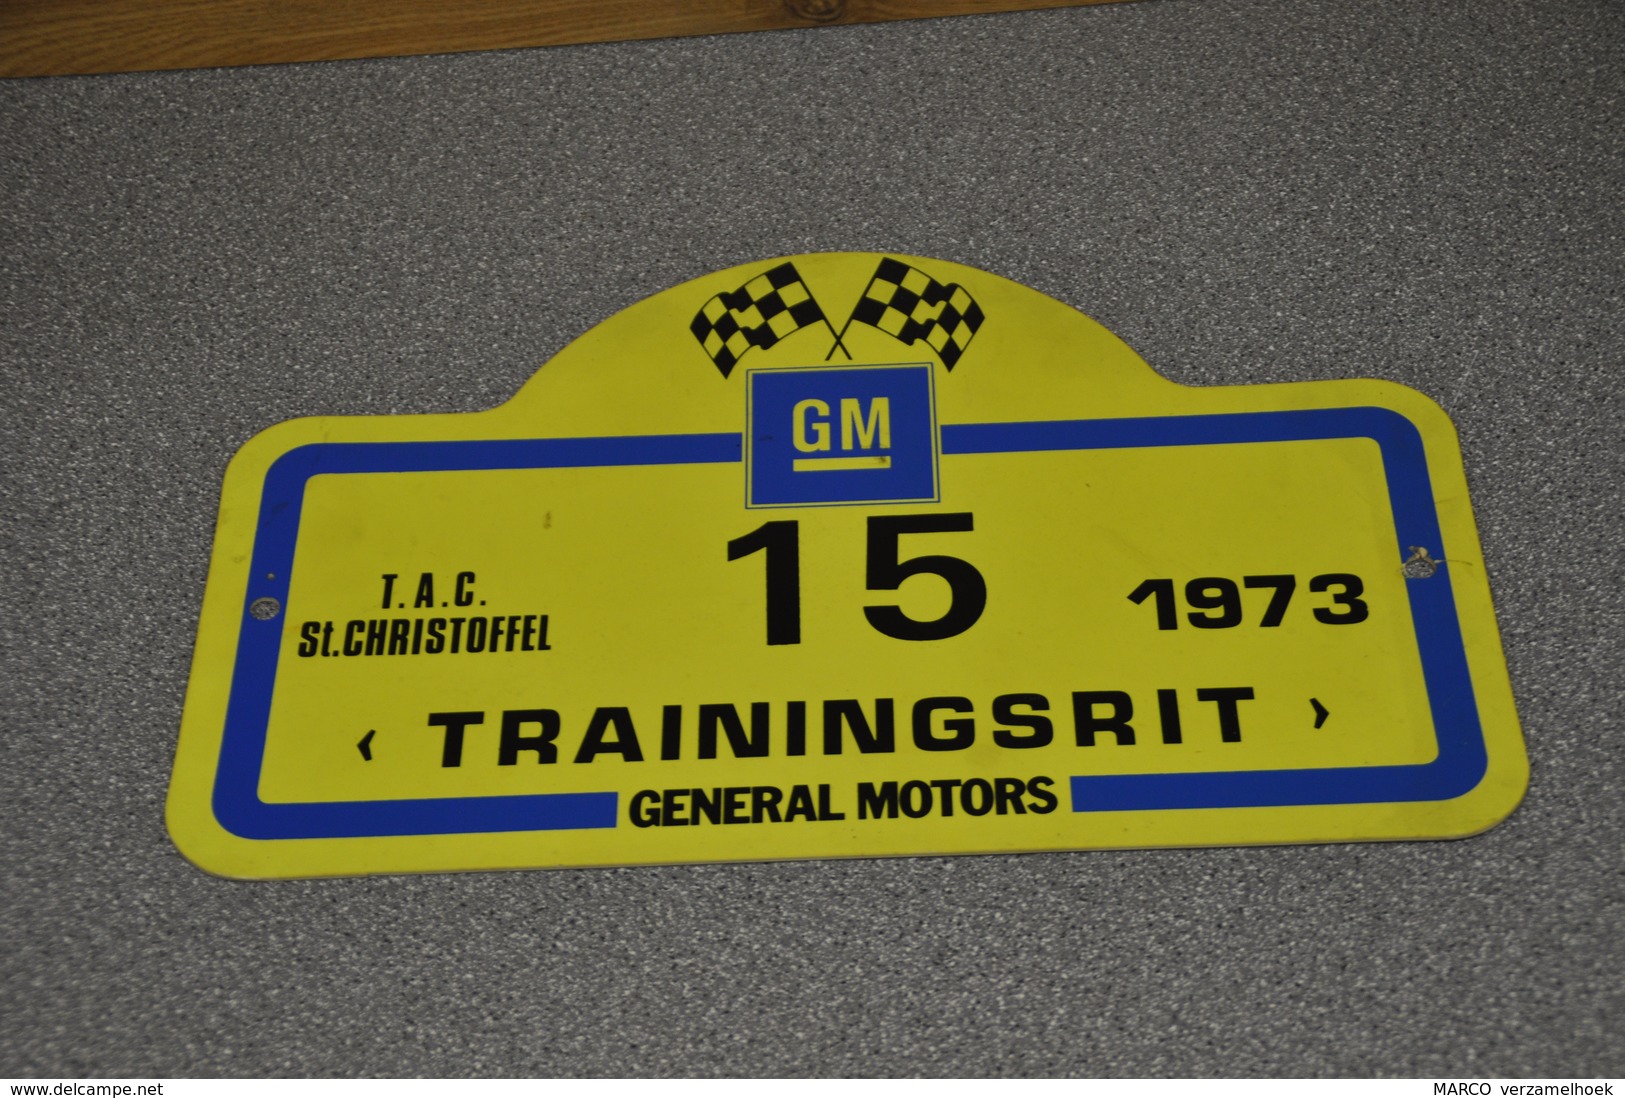 Rally Plaat-rallye Plaque Plastic: Trainingsrit Tilburgse Automobielclub 1973 GM General Motors - Plaques De Rallye